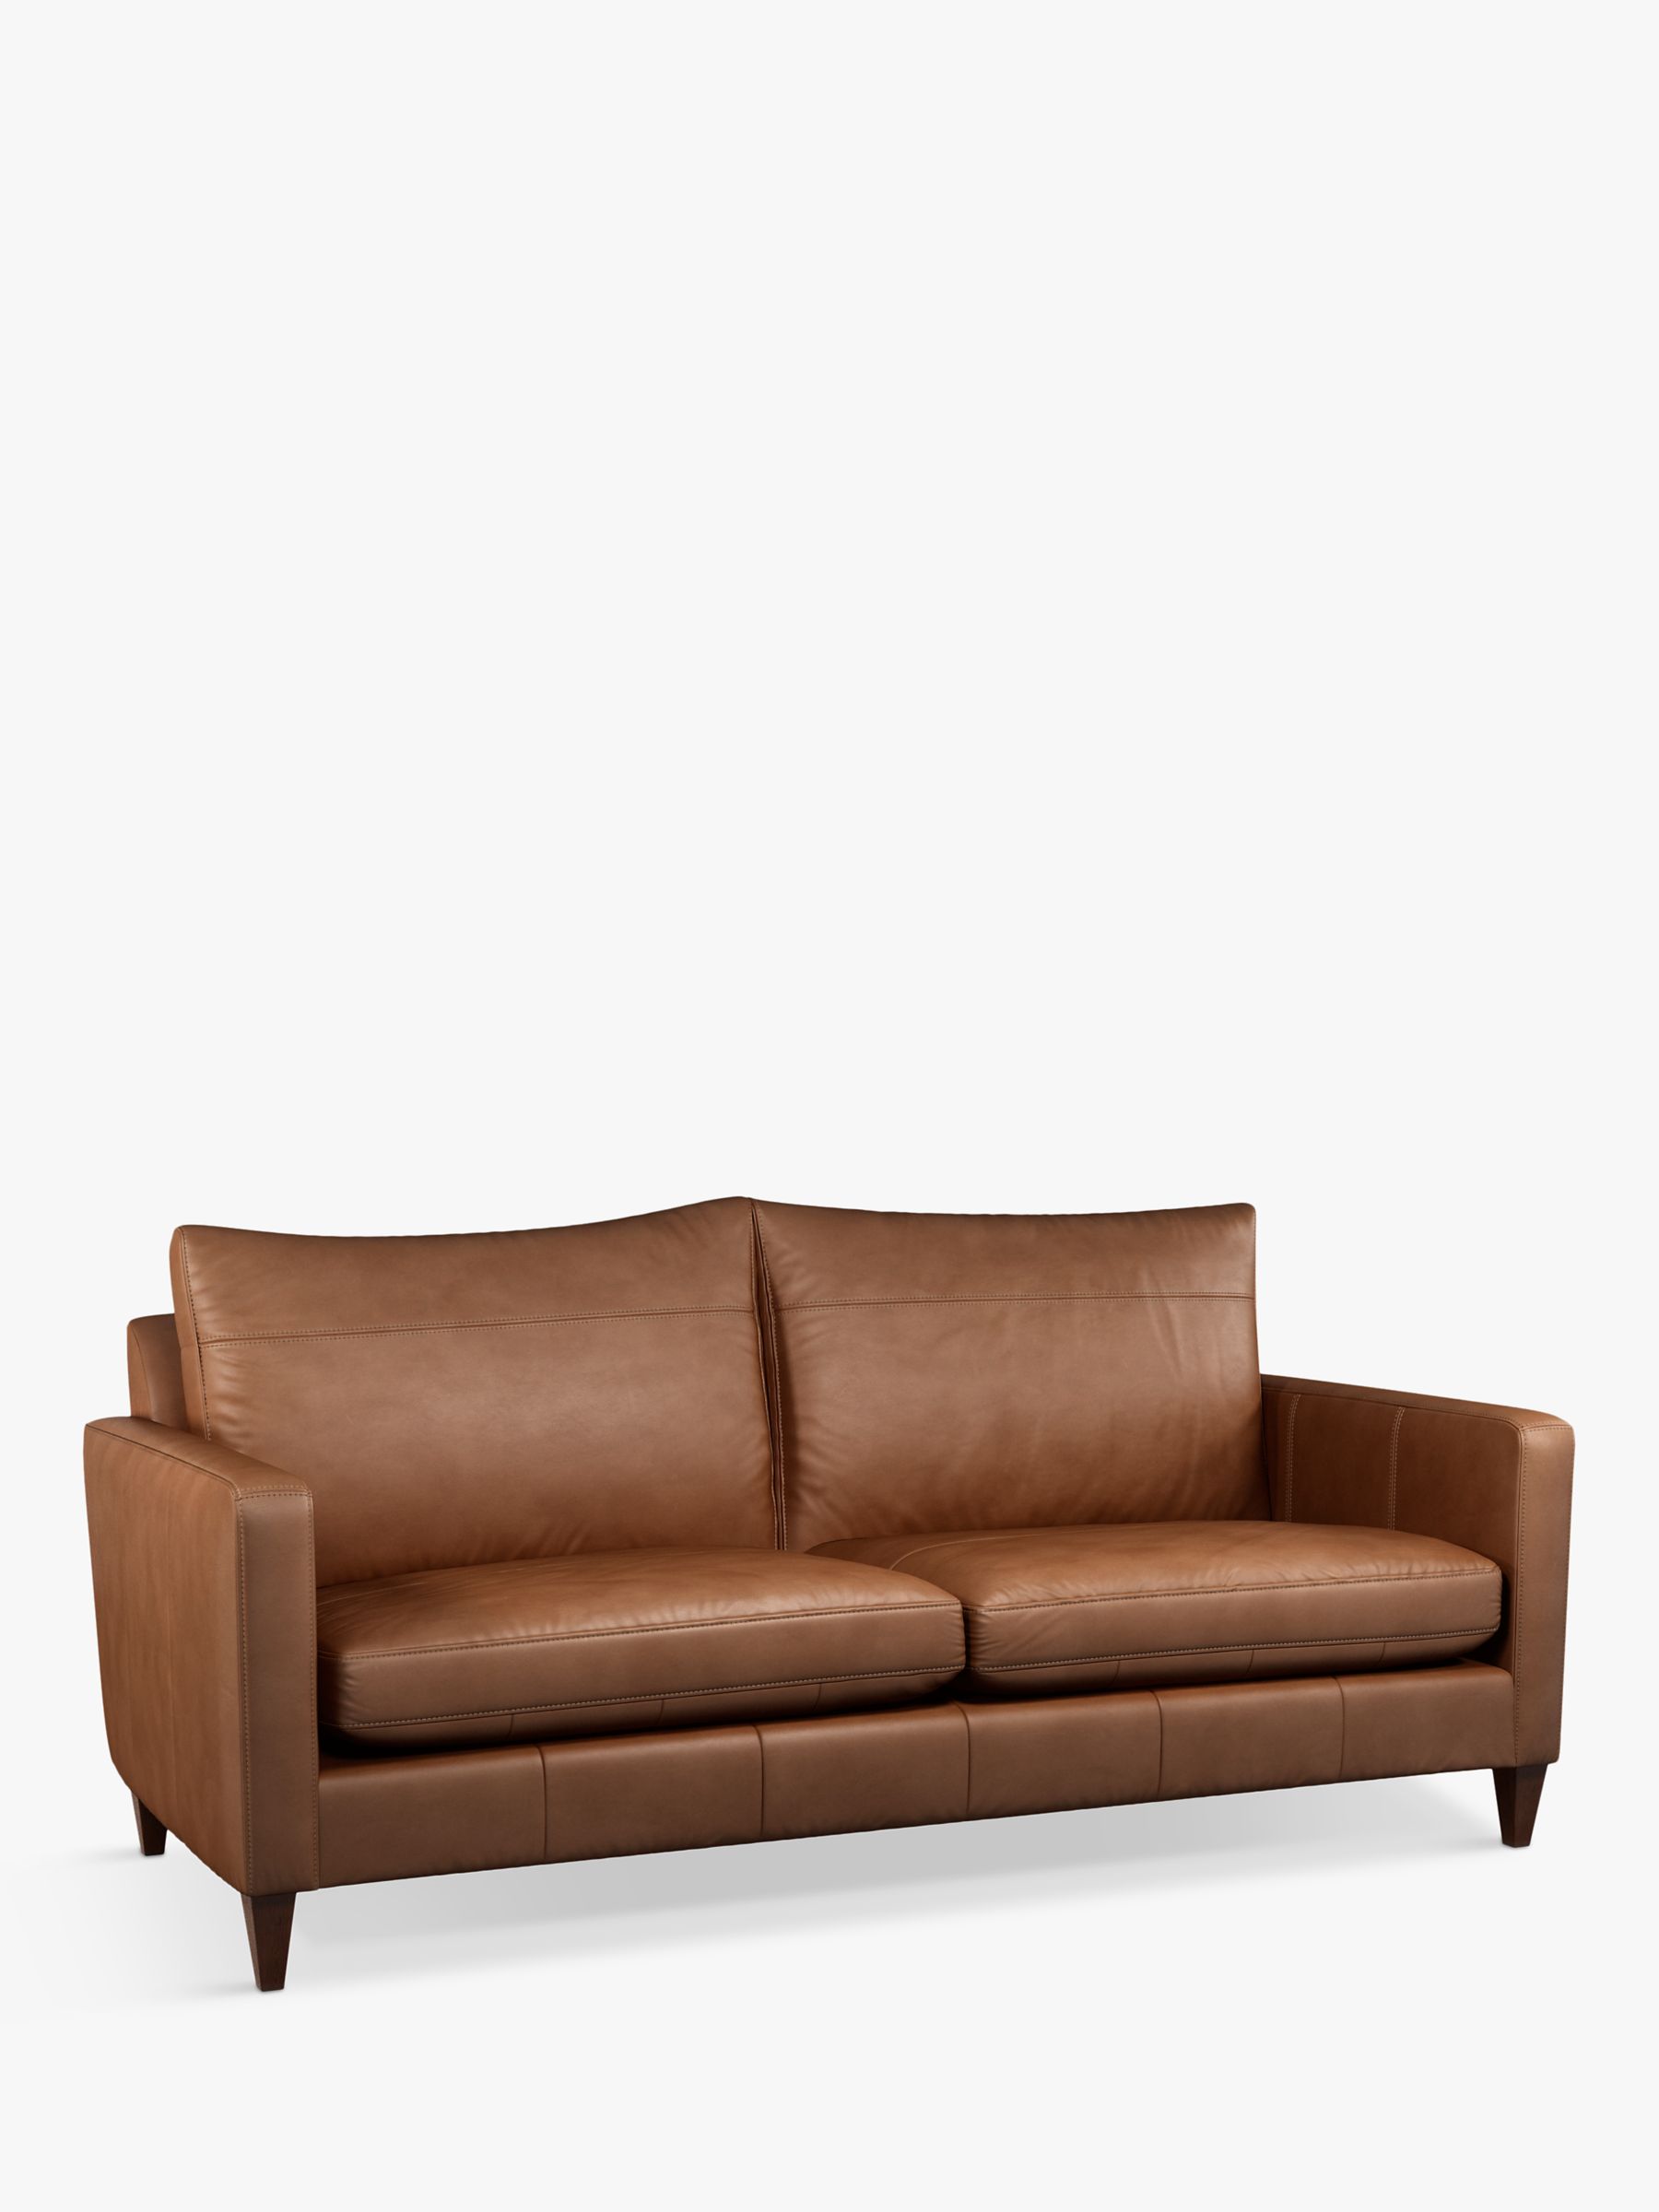 John Lewis Bailey Large 3 Seater Leather Sofa, Dark Leg, Sellvagio Cognac